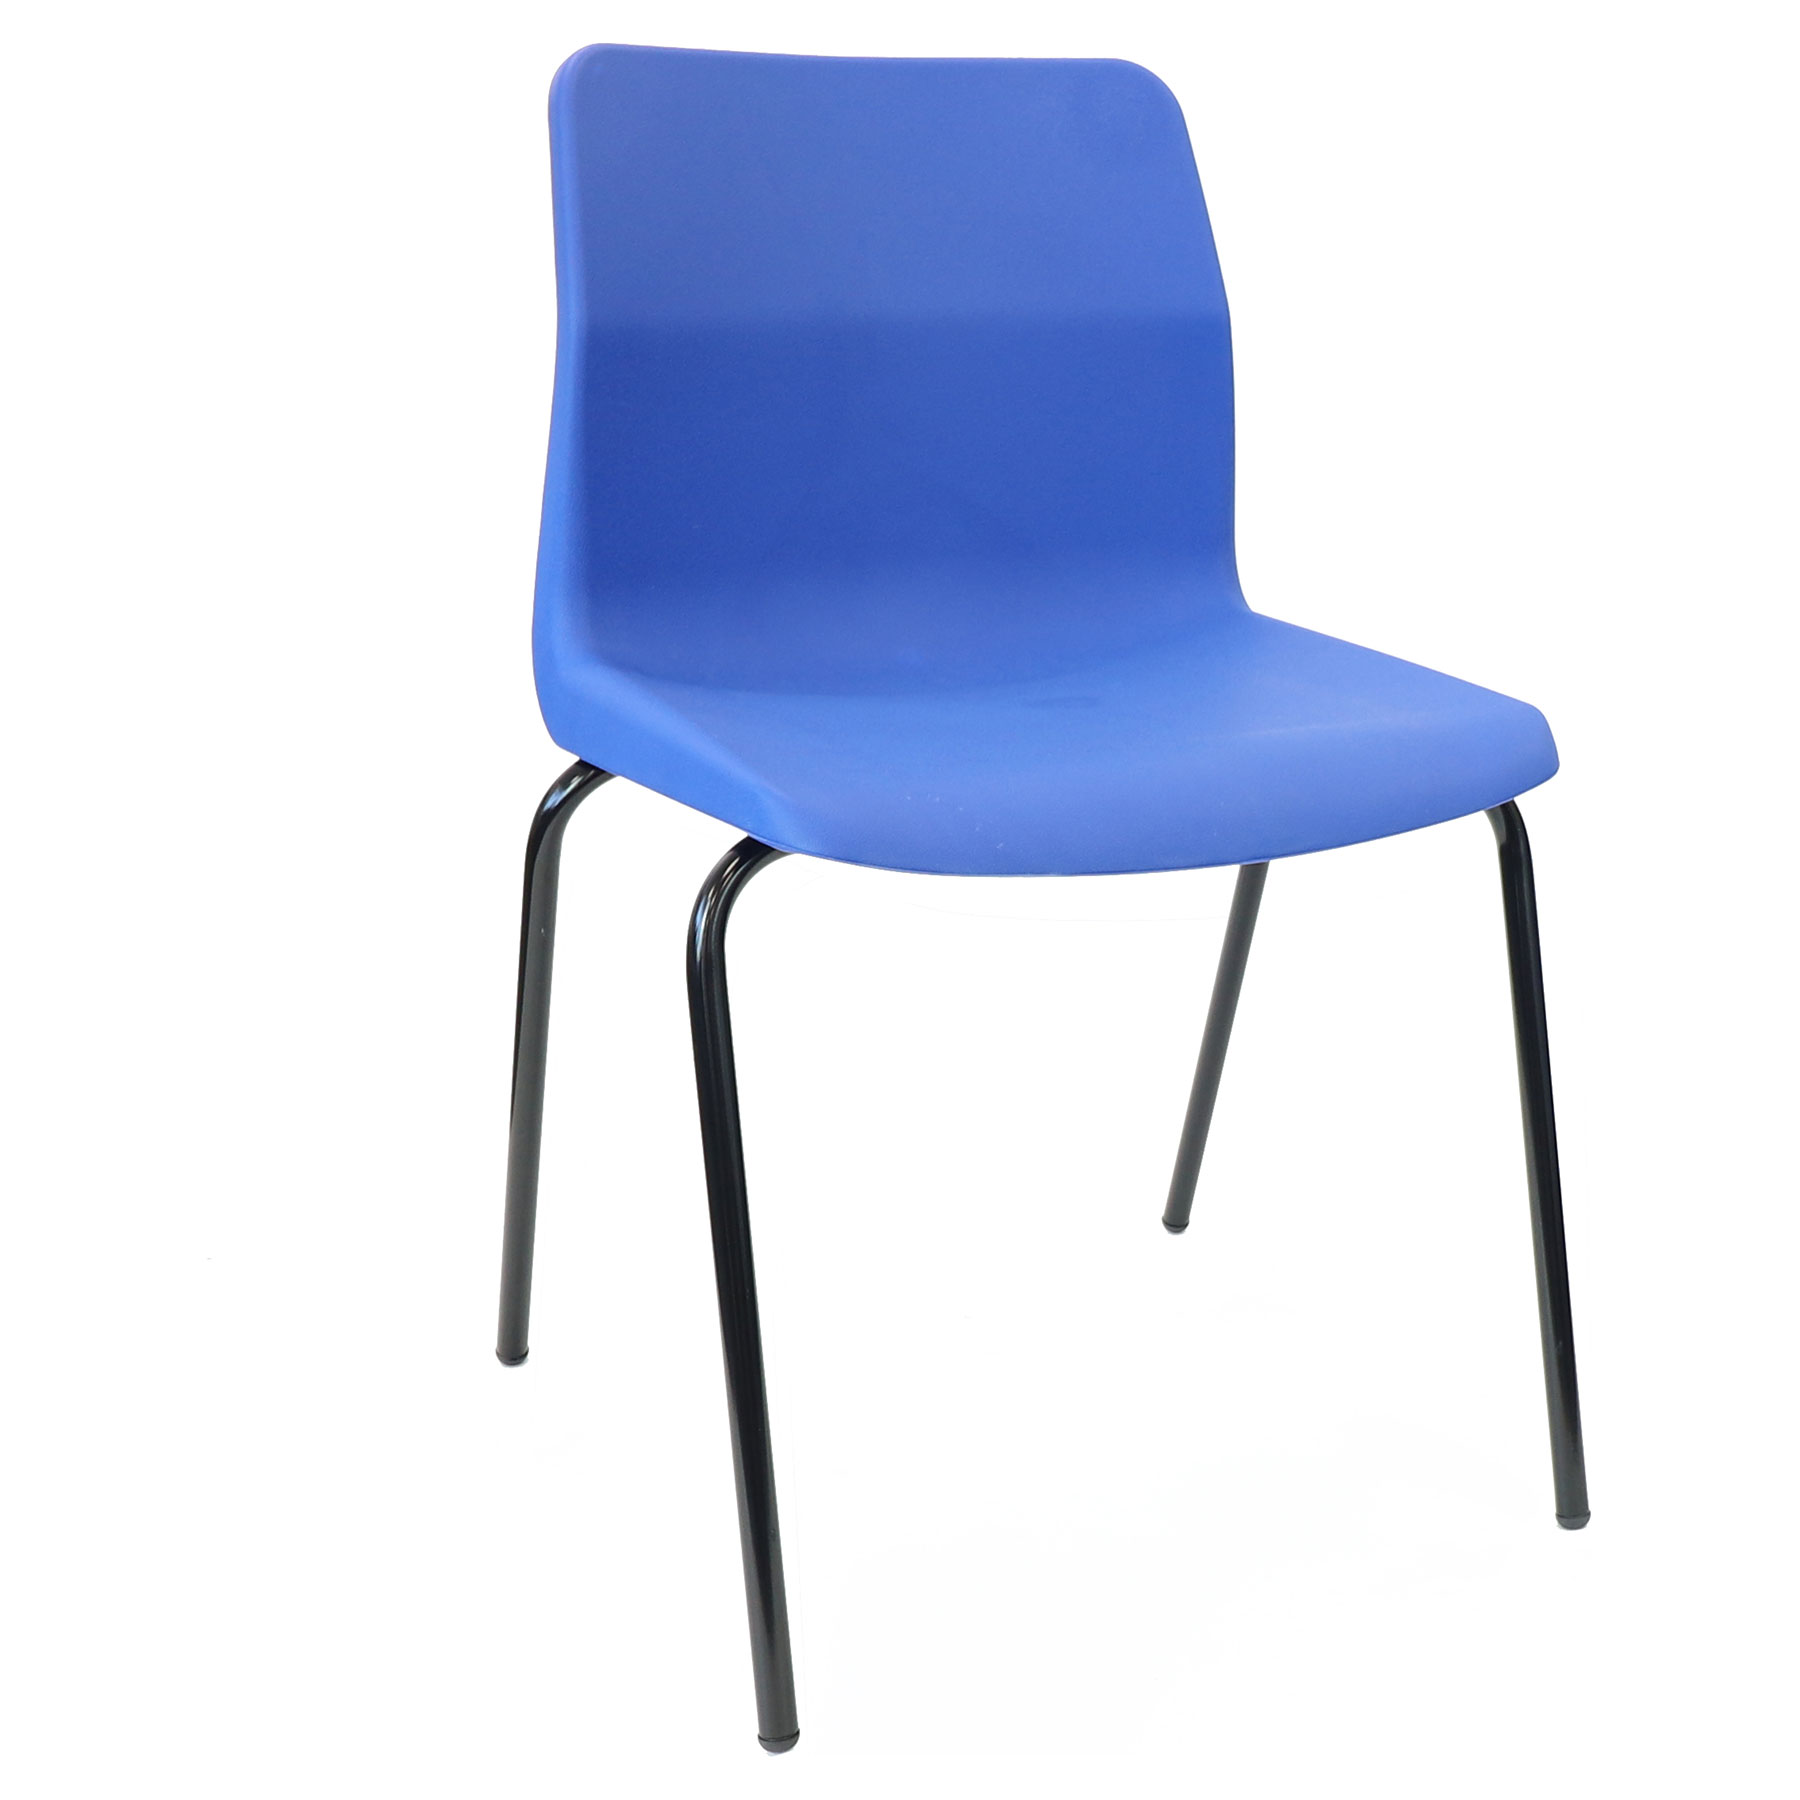 KM P6 School Classroom Chair